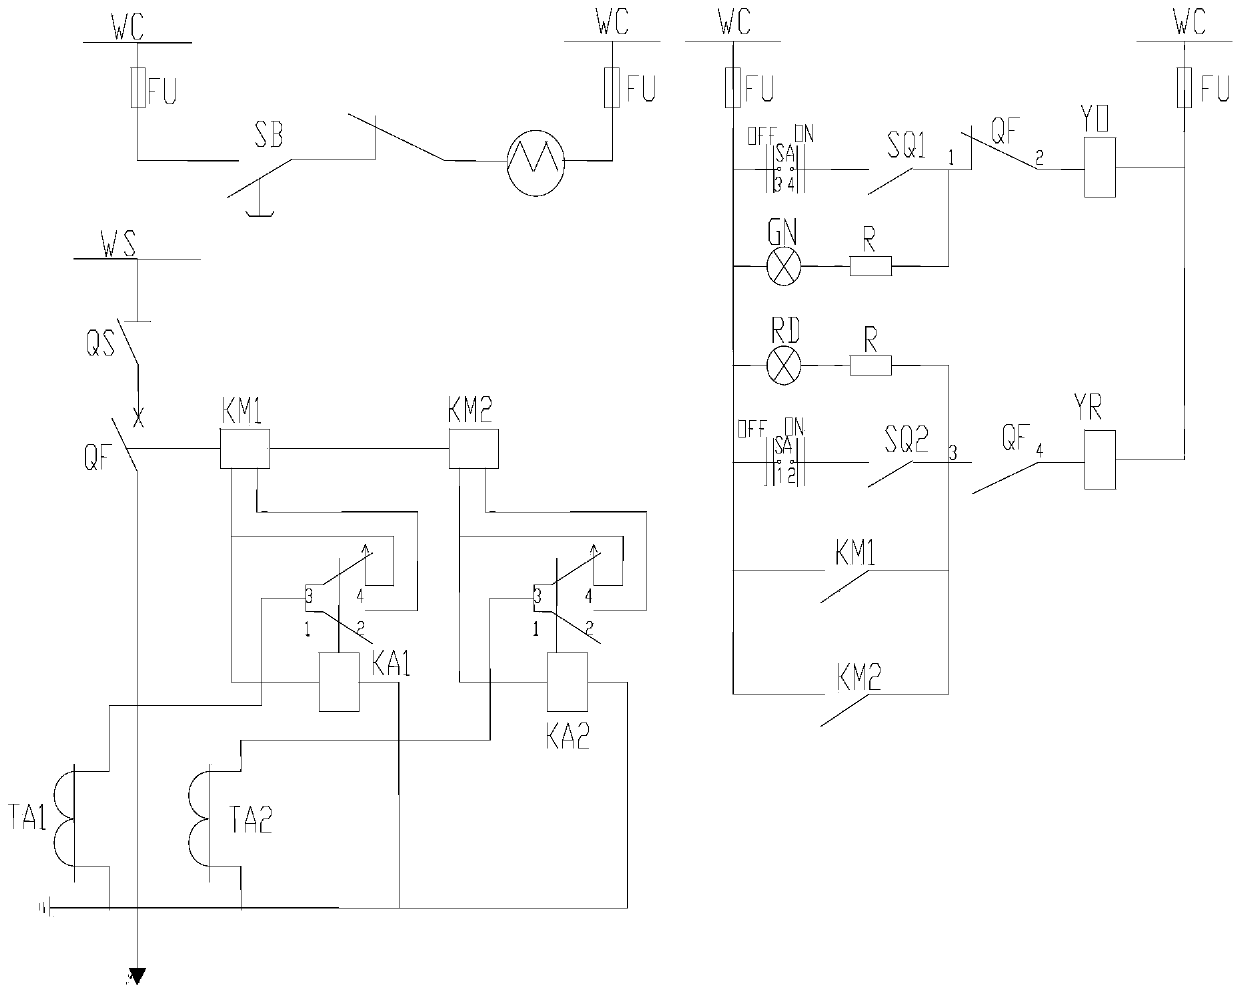 PLC control system of circuit breaker secondary circuit